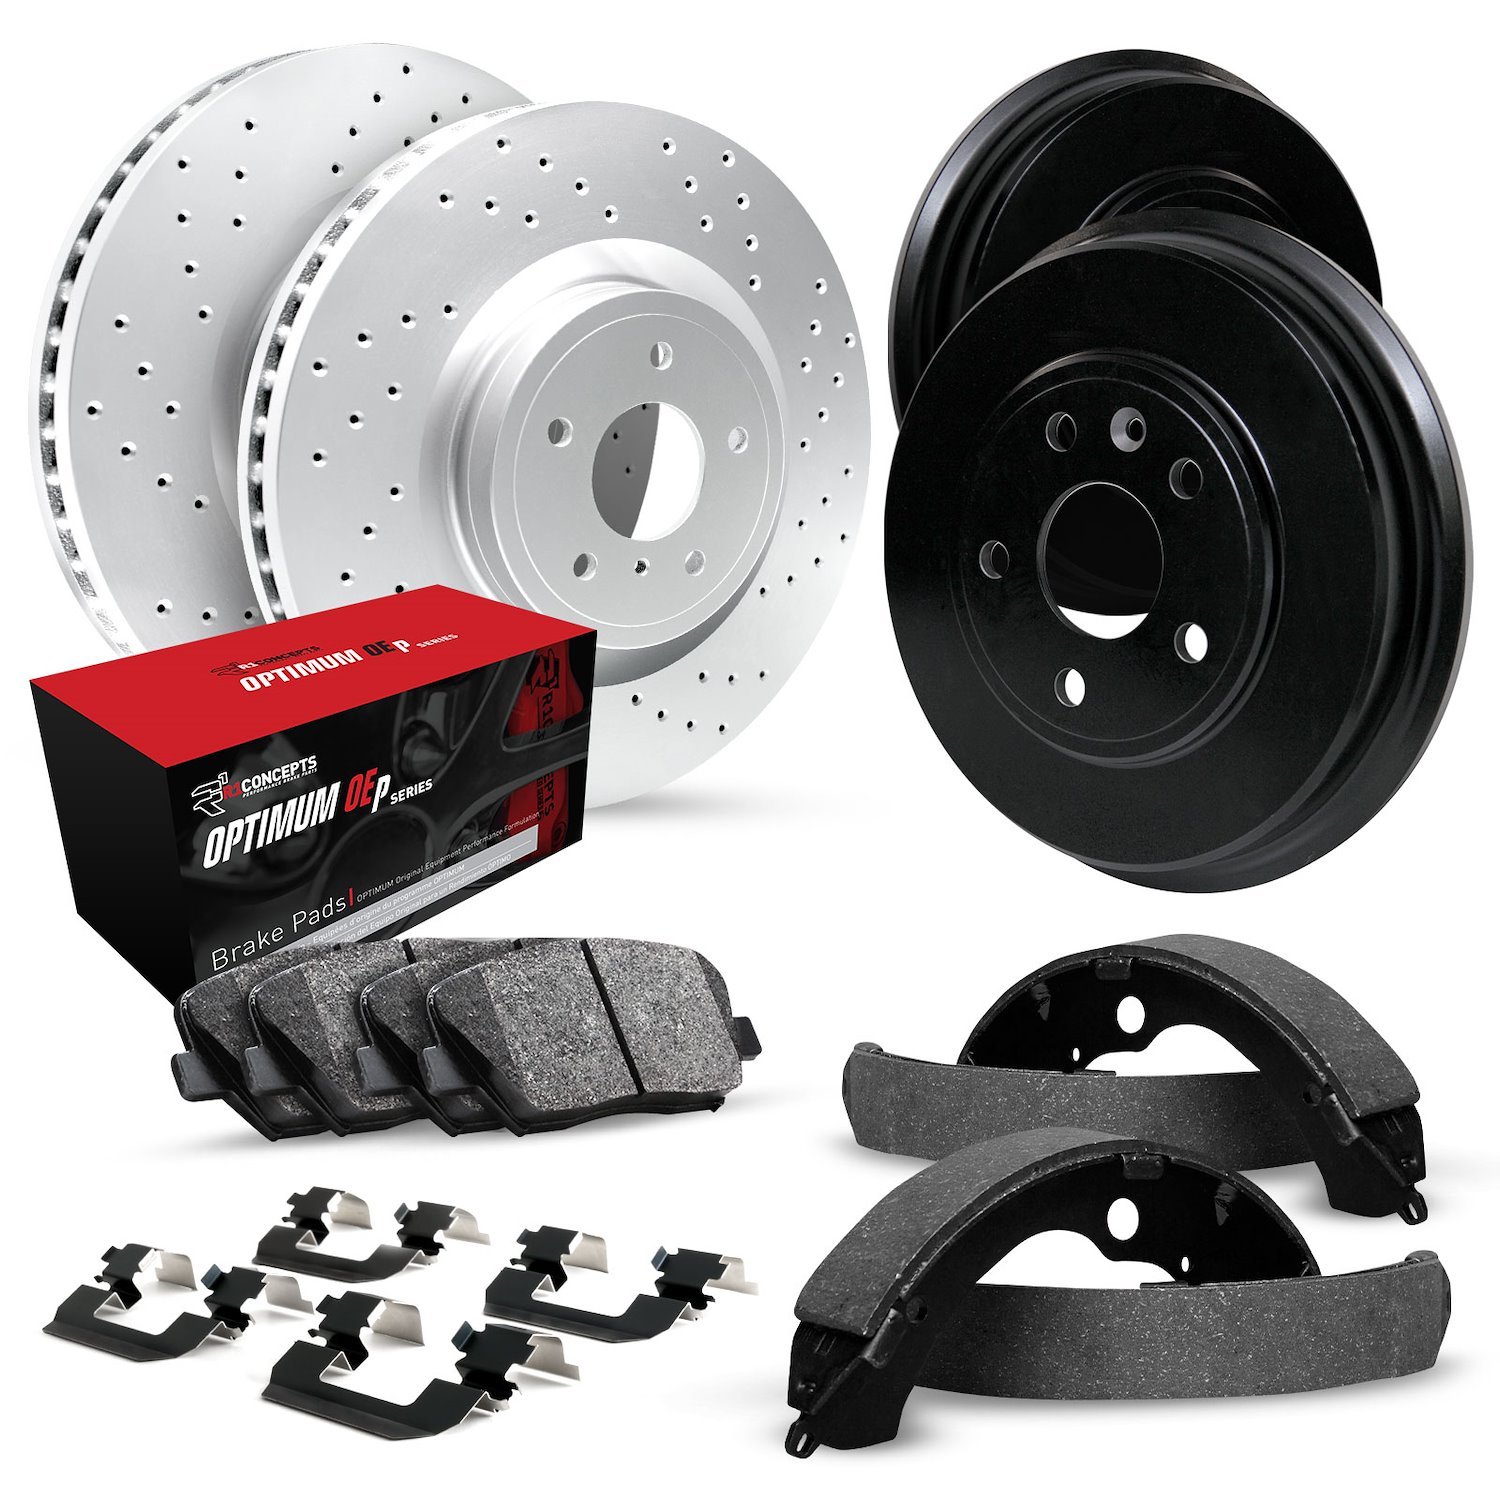 GEO-Carbon Drilled Brake Rotor & Drum Set w/Optimum OE Pads, Shoes, & Hardware, 2011-2019 Ford/Lincoln/Mercury/Mazda